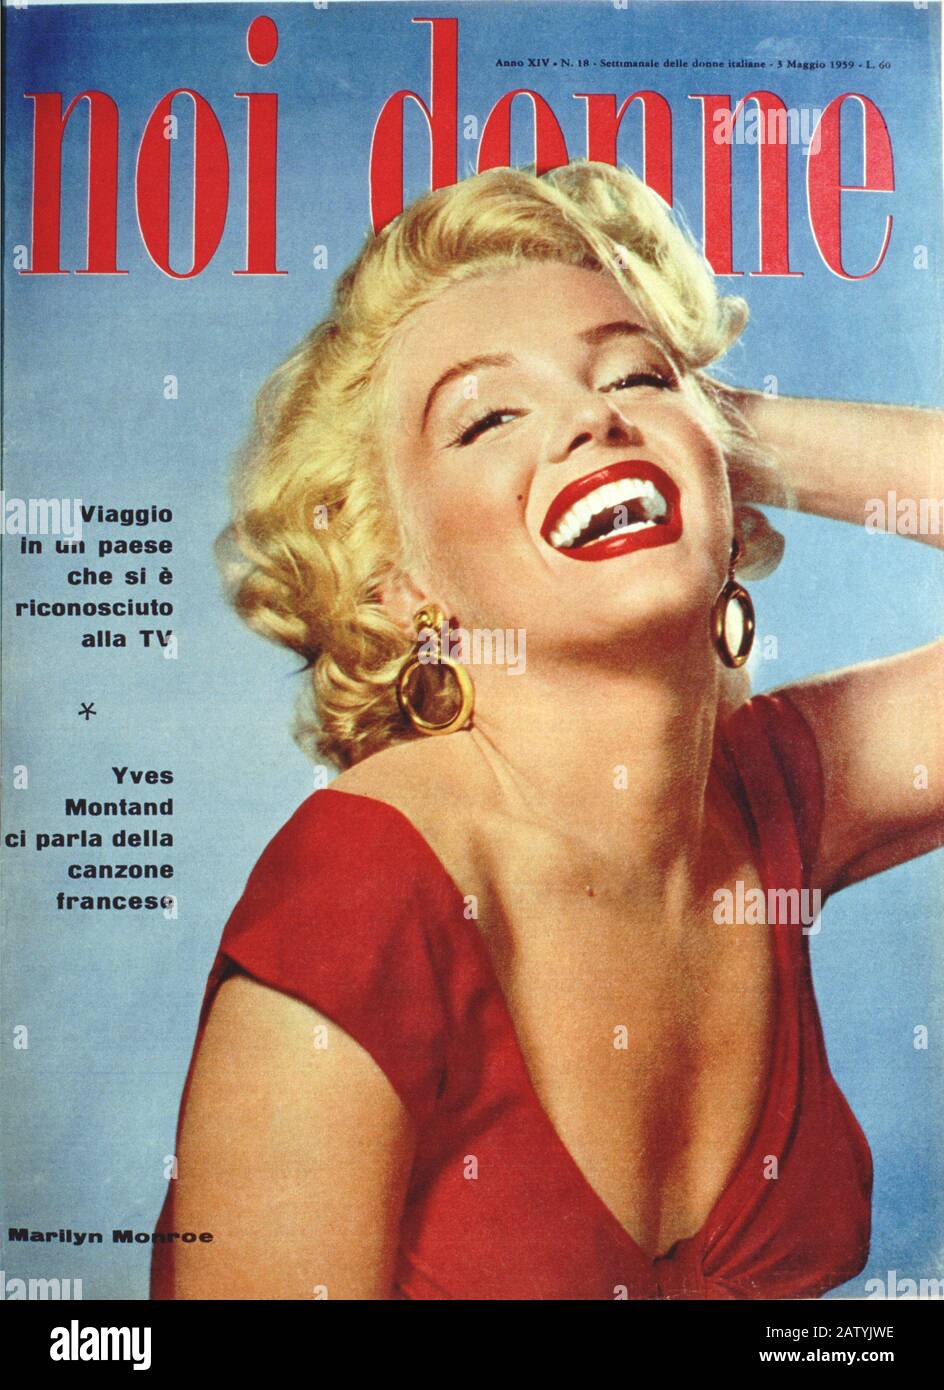 MARILYN MONROE cover of italian magazine 